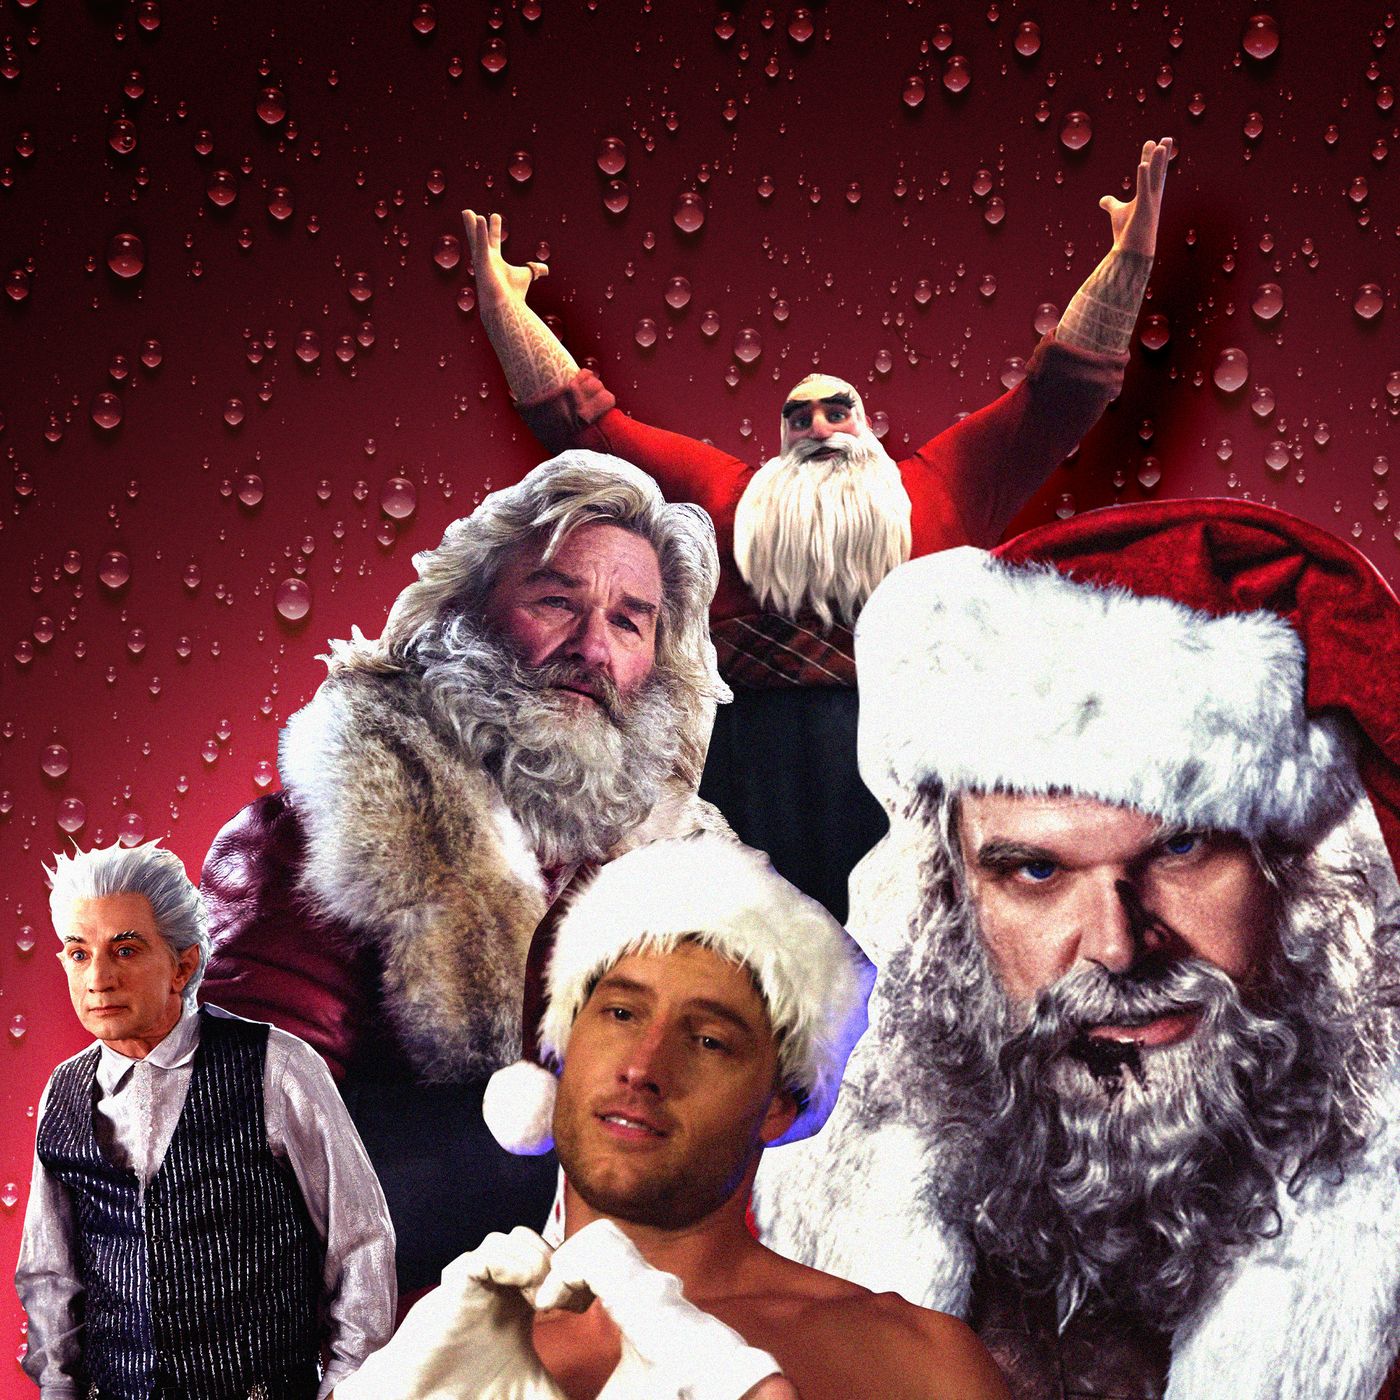 Sex Video 12 13 Saal Ladki Ka - The 15 Hottest Hot Santas in Christmas Movies